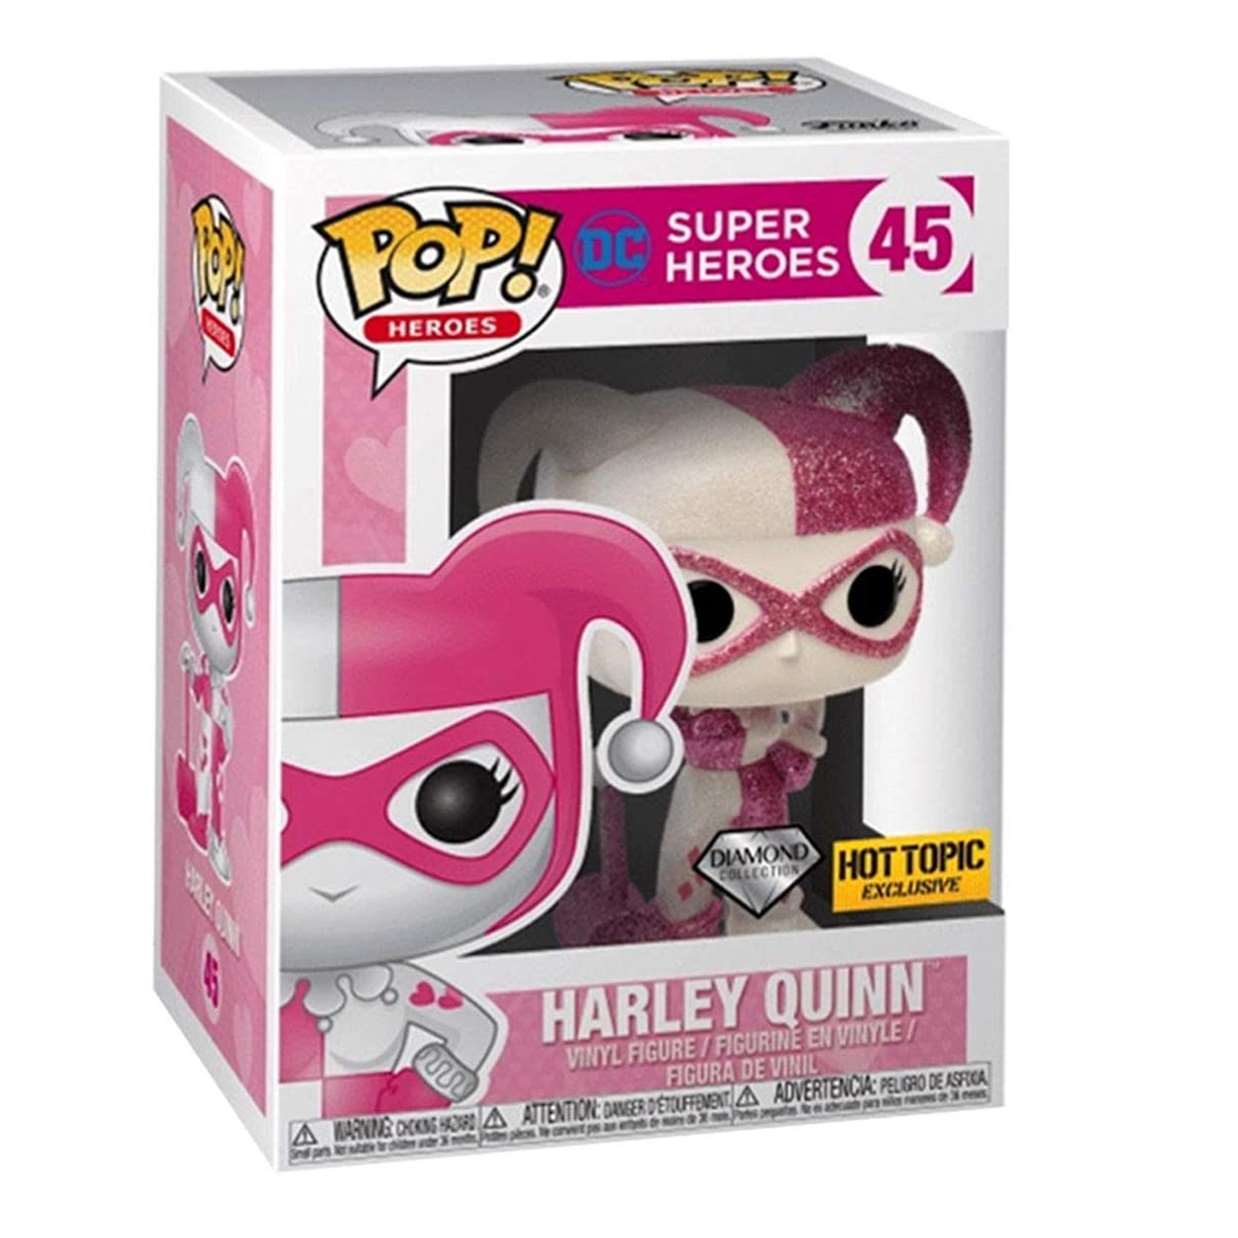 Harley Quinn #45 Super Heroes Funko Pop! Hot Topic